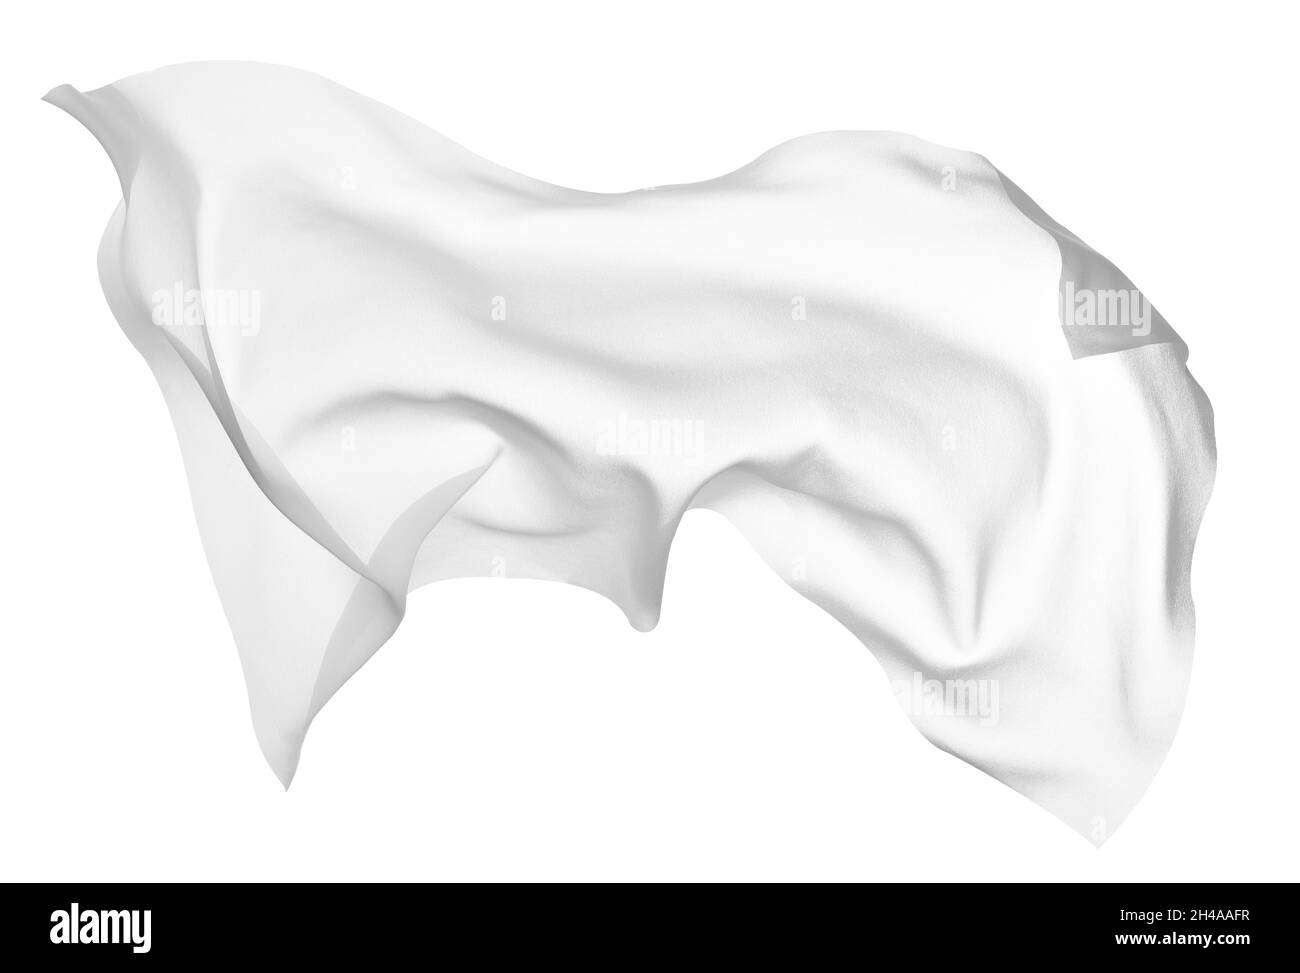 tessuto bianco tessuto vento seta onda sfondo moda satinato movimento drappeggi sciarpa volante chiffon velo Foto Stock